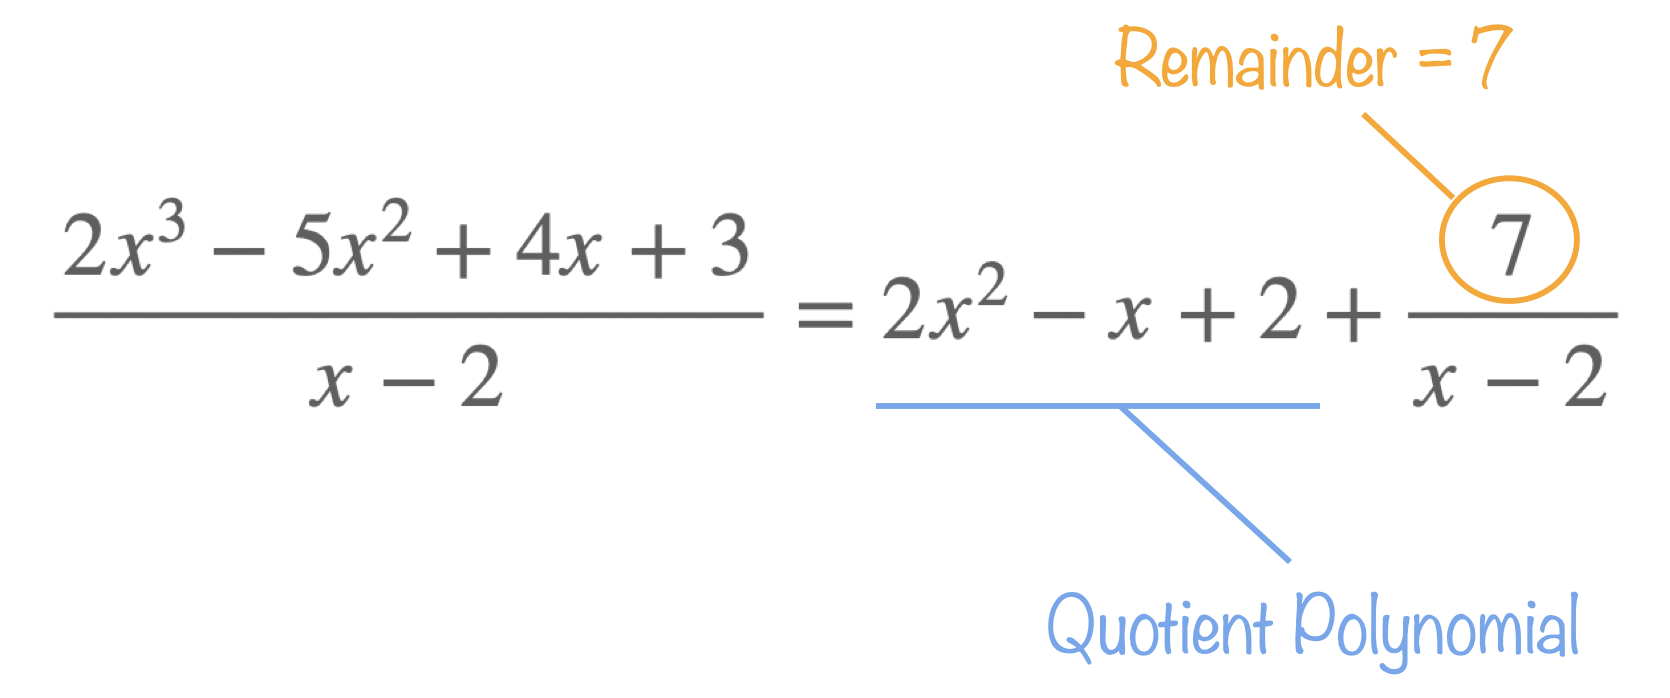 Factor & Remainder Theorems